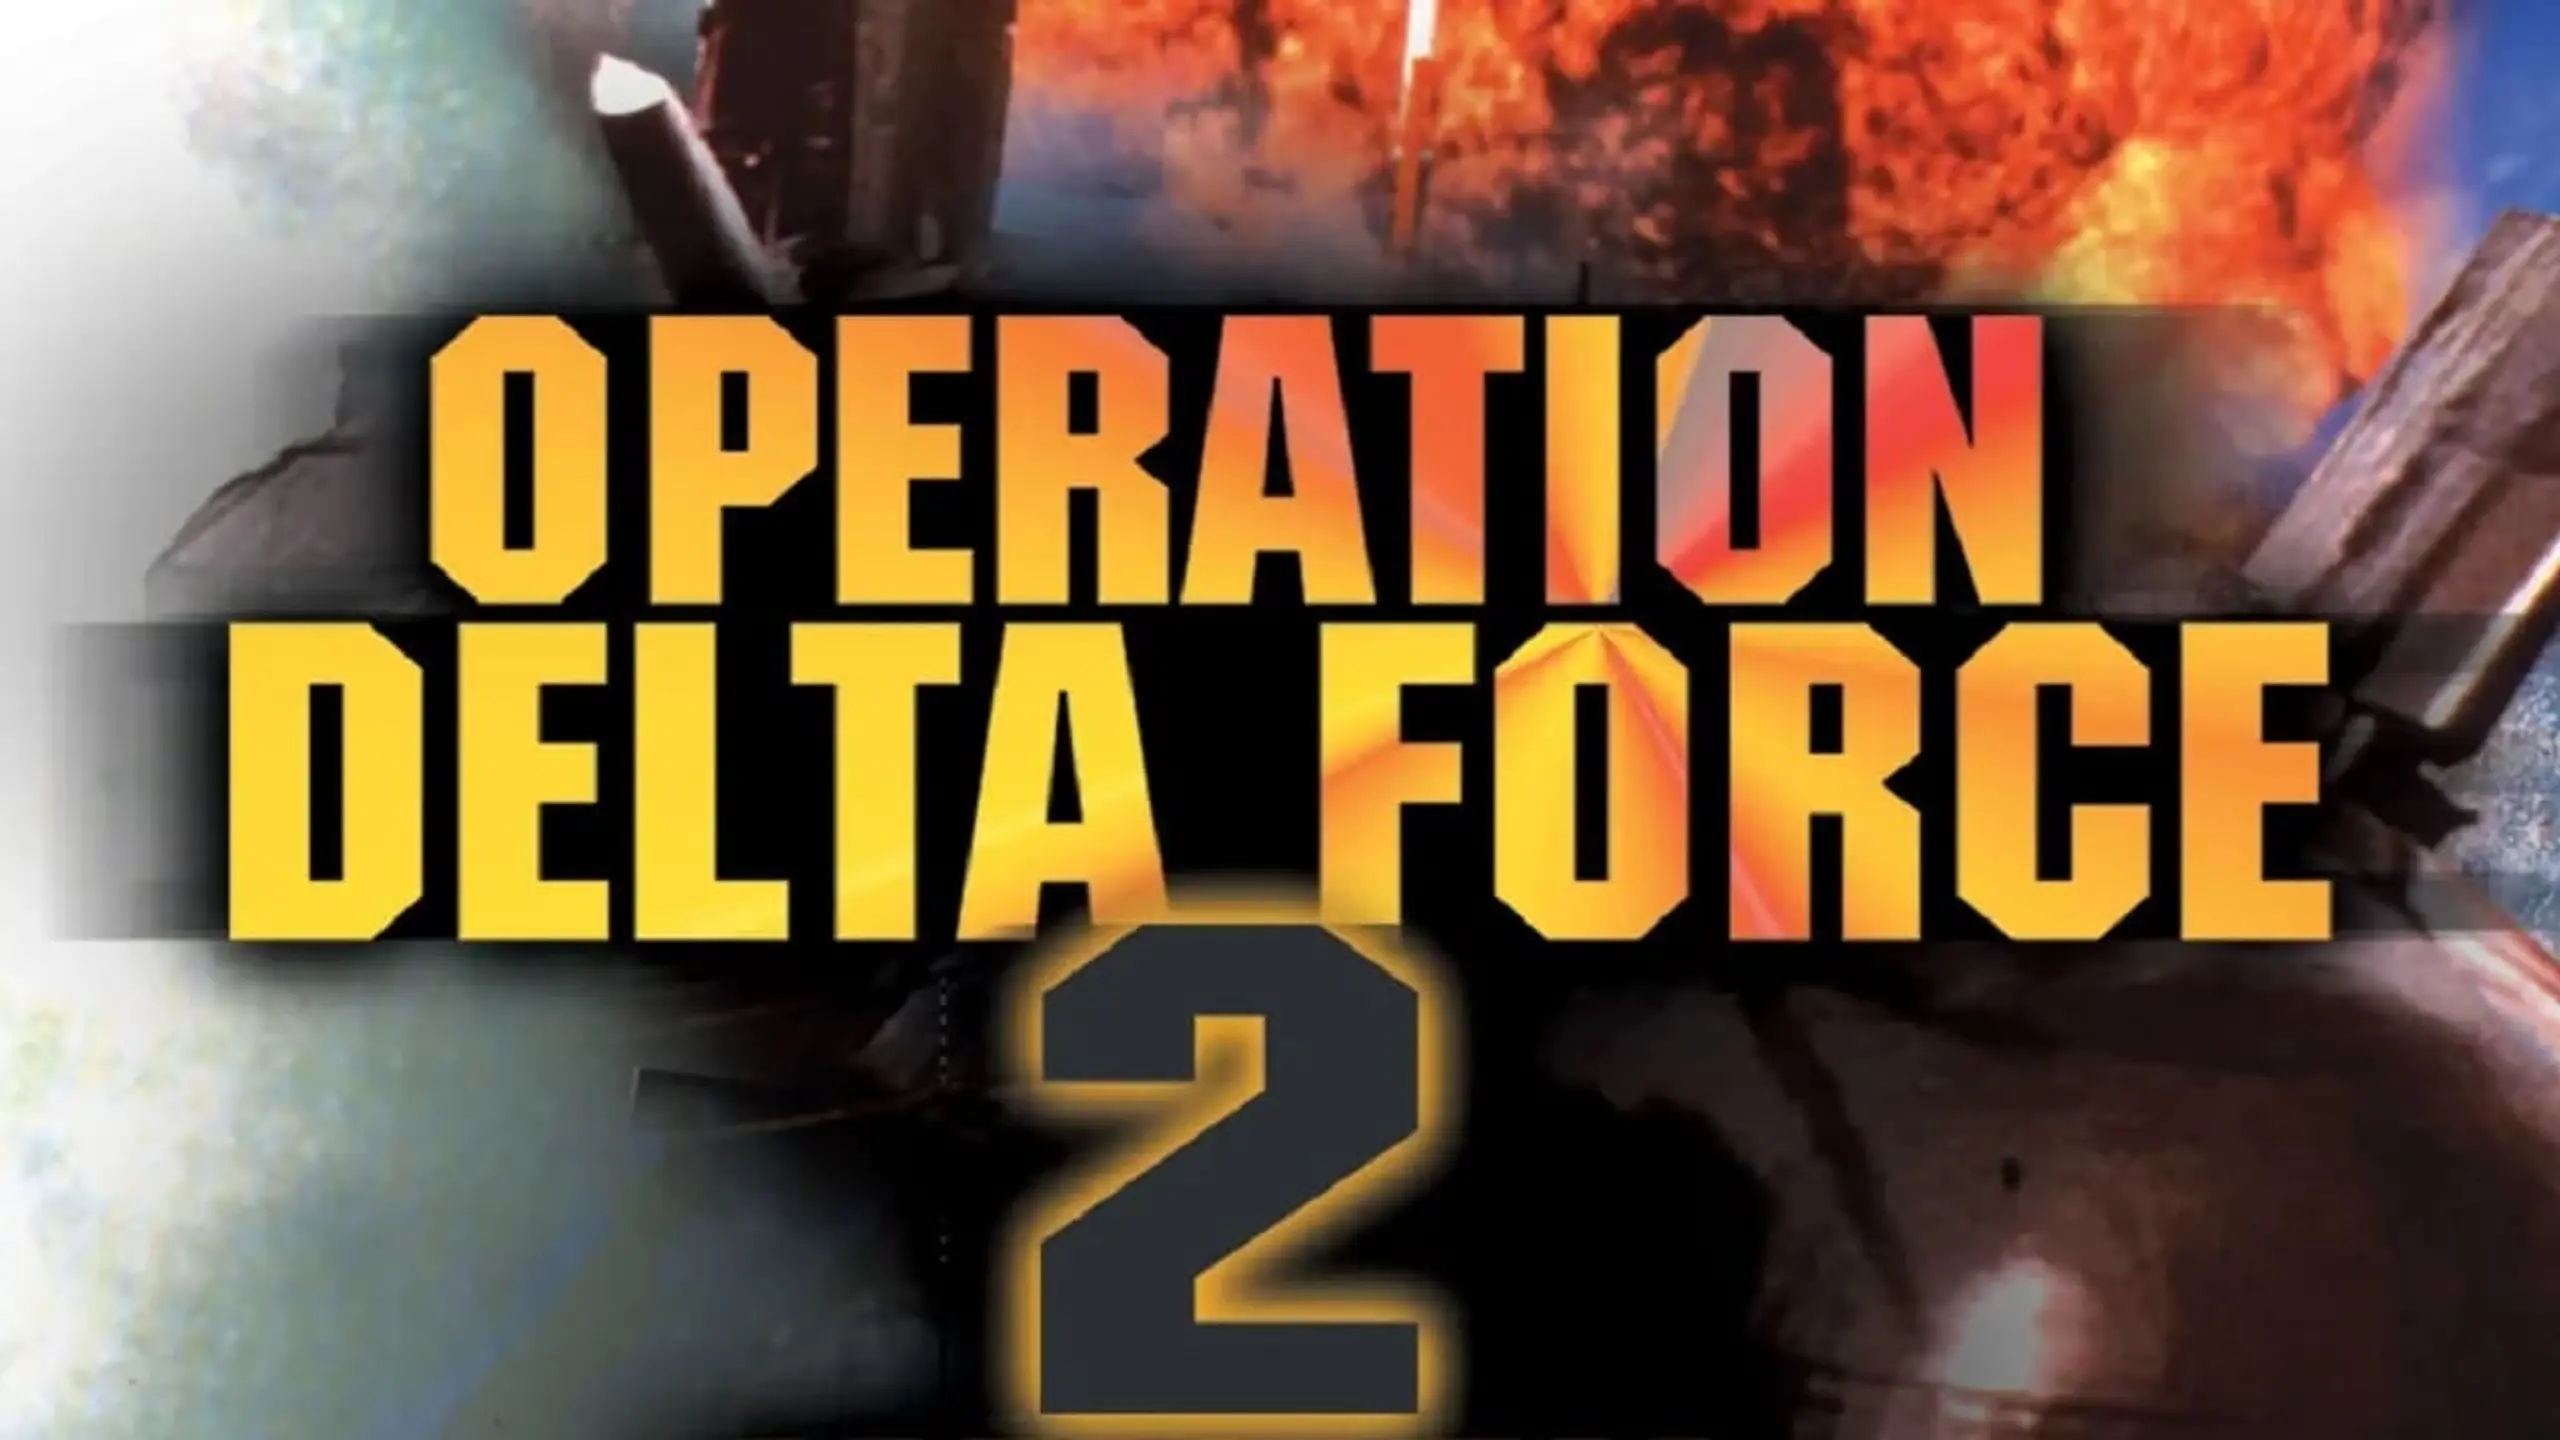 Operation Delta Force II